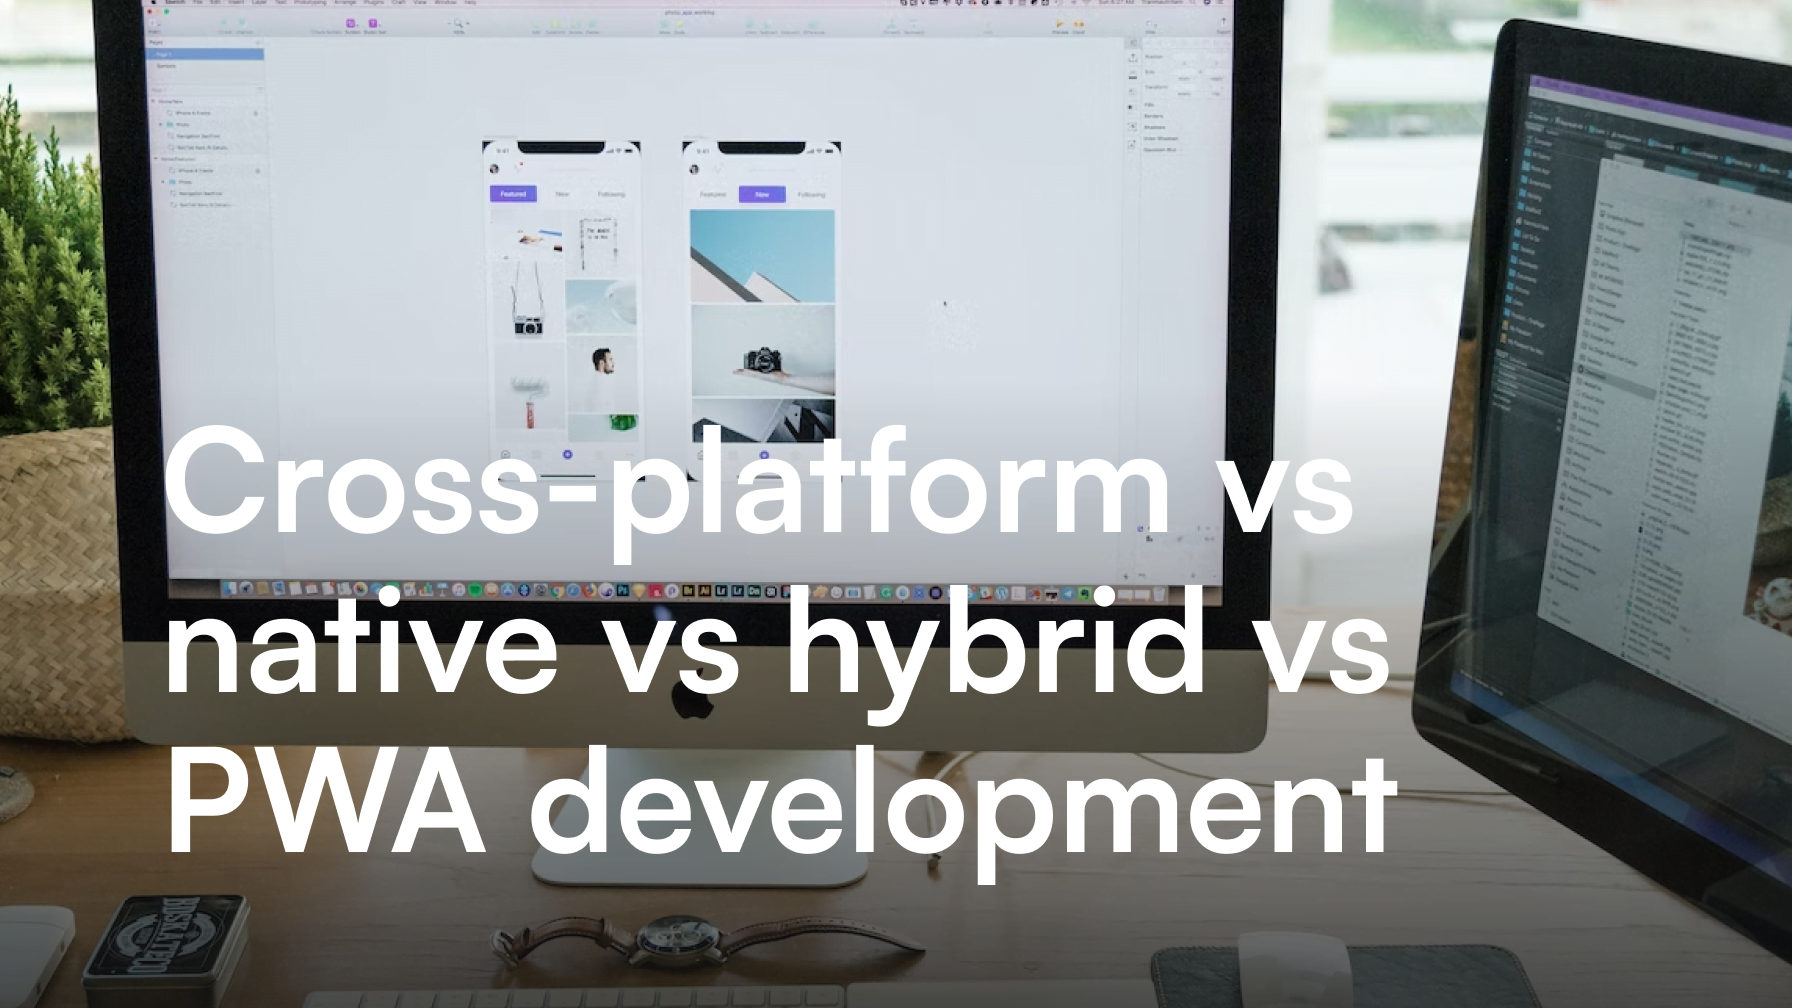 Cross-platform vs native vs hybrid vs PWA development